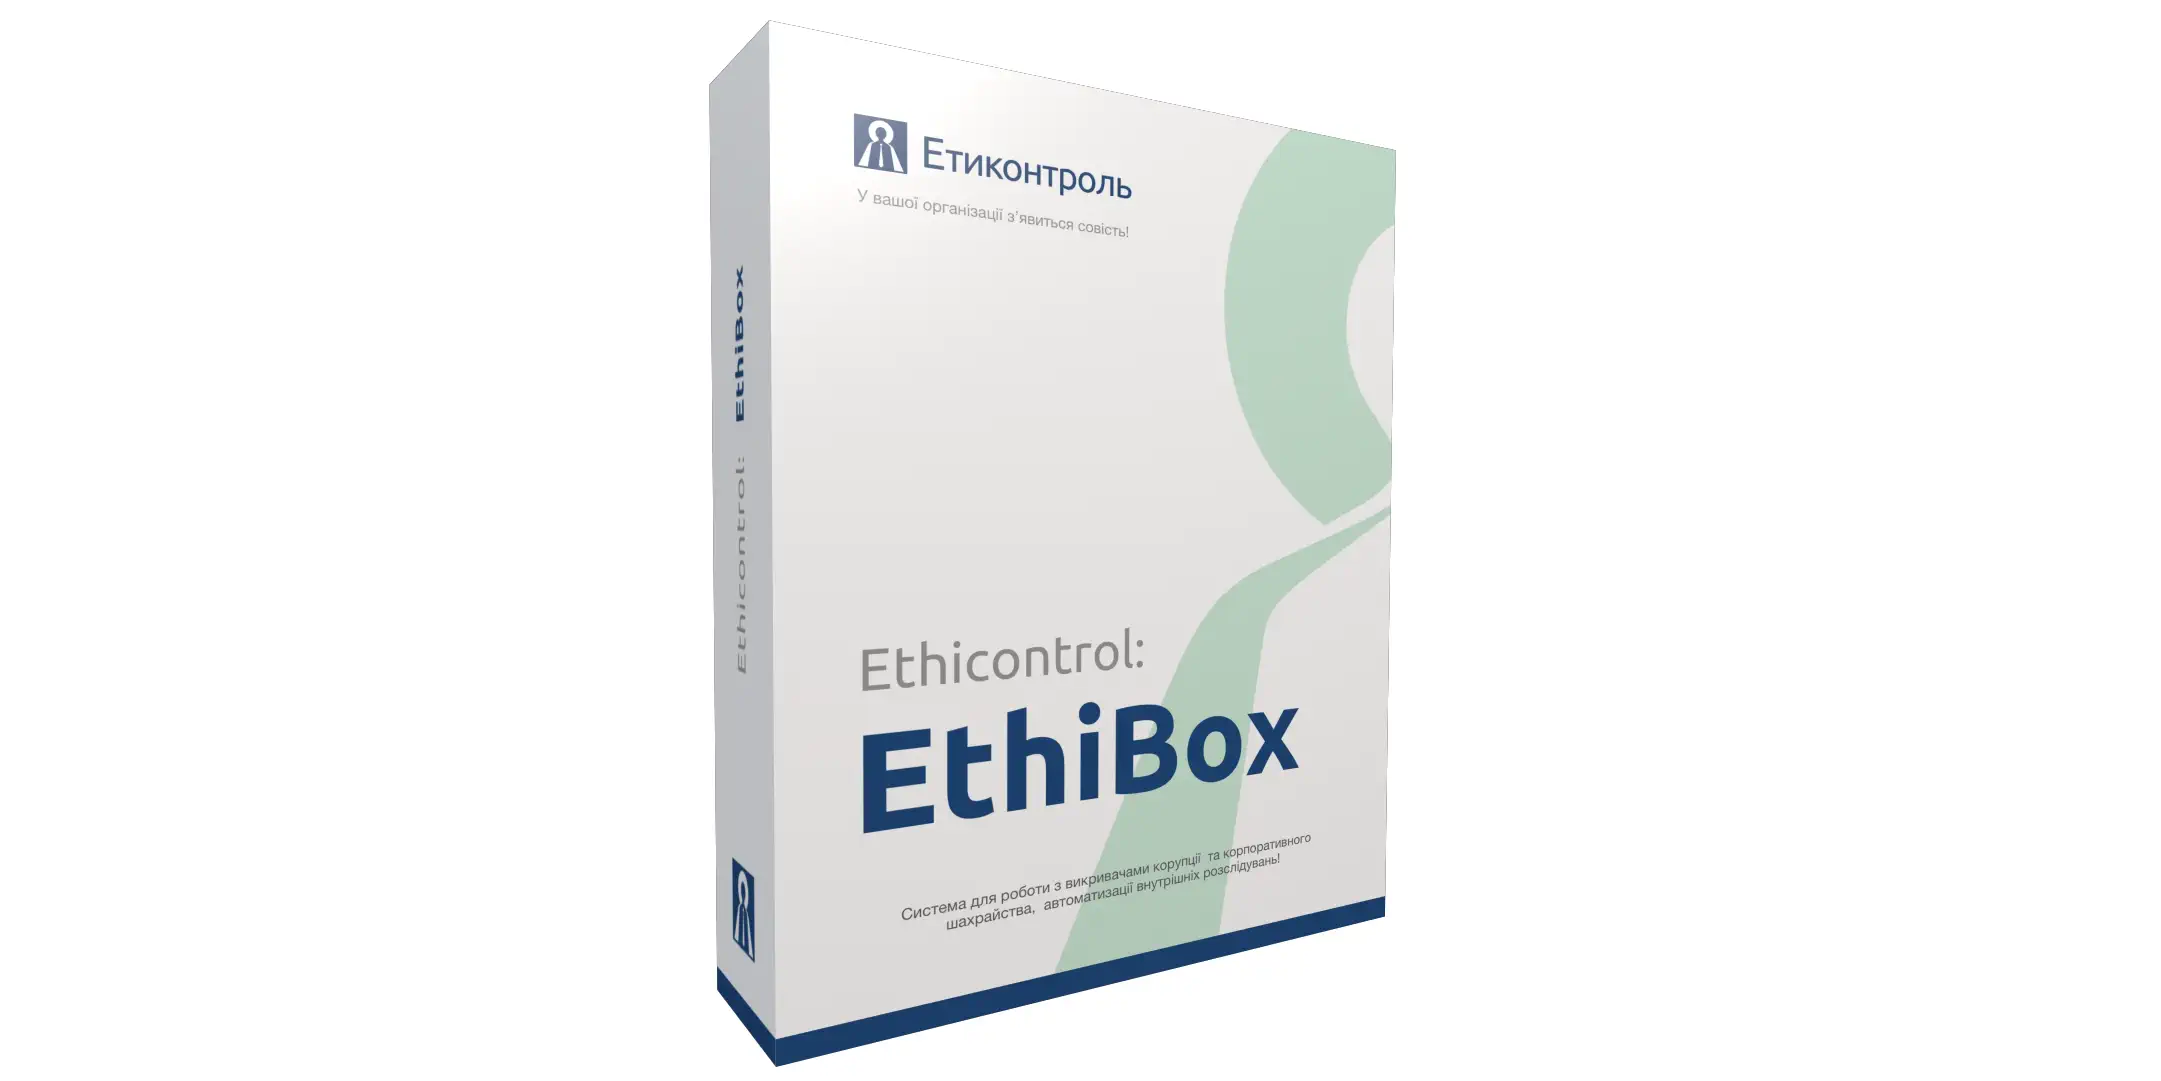 Box software solution EthiBox